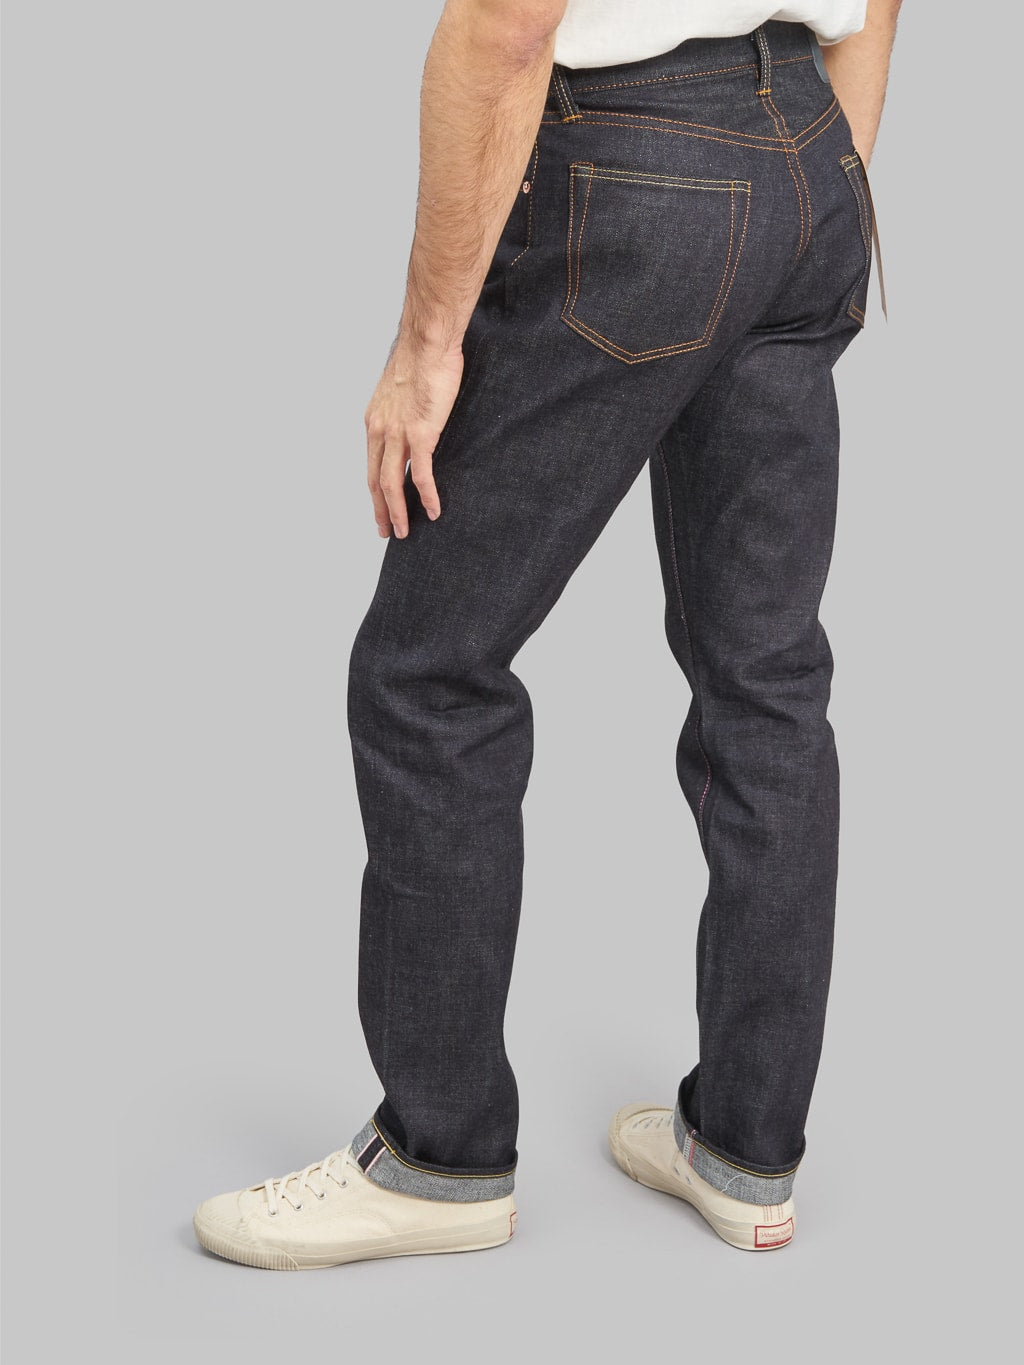 Momotaro 0605-13 13oz Natural Tapered Jeans